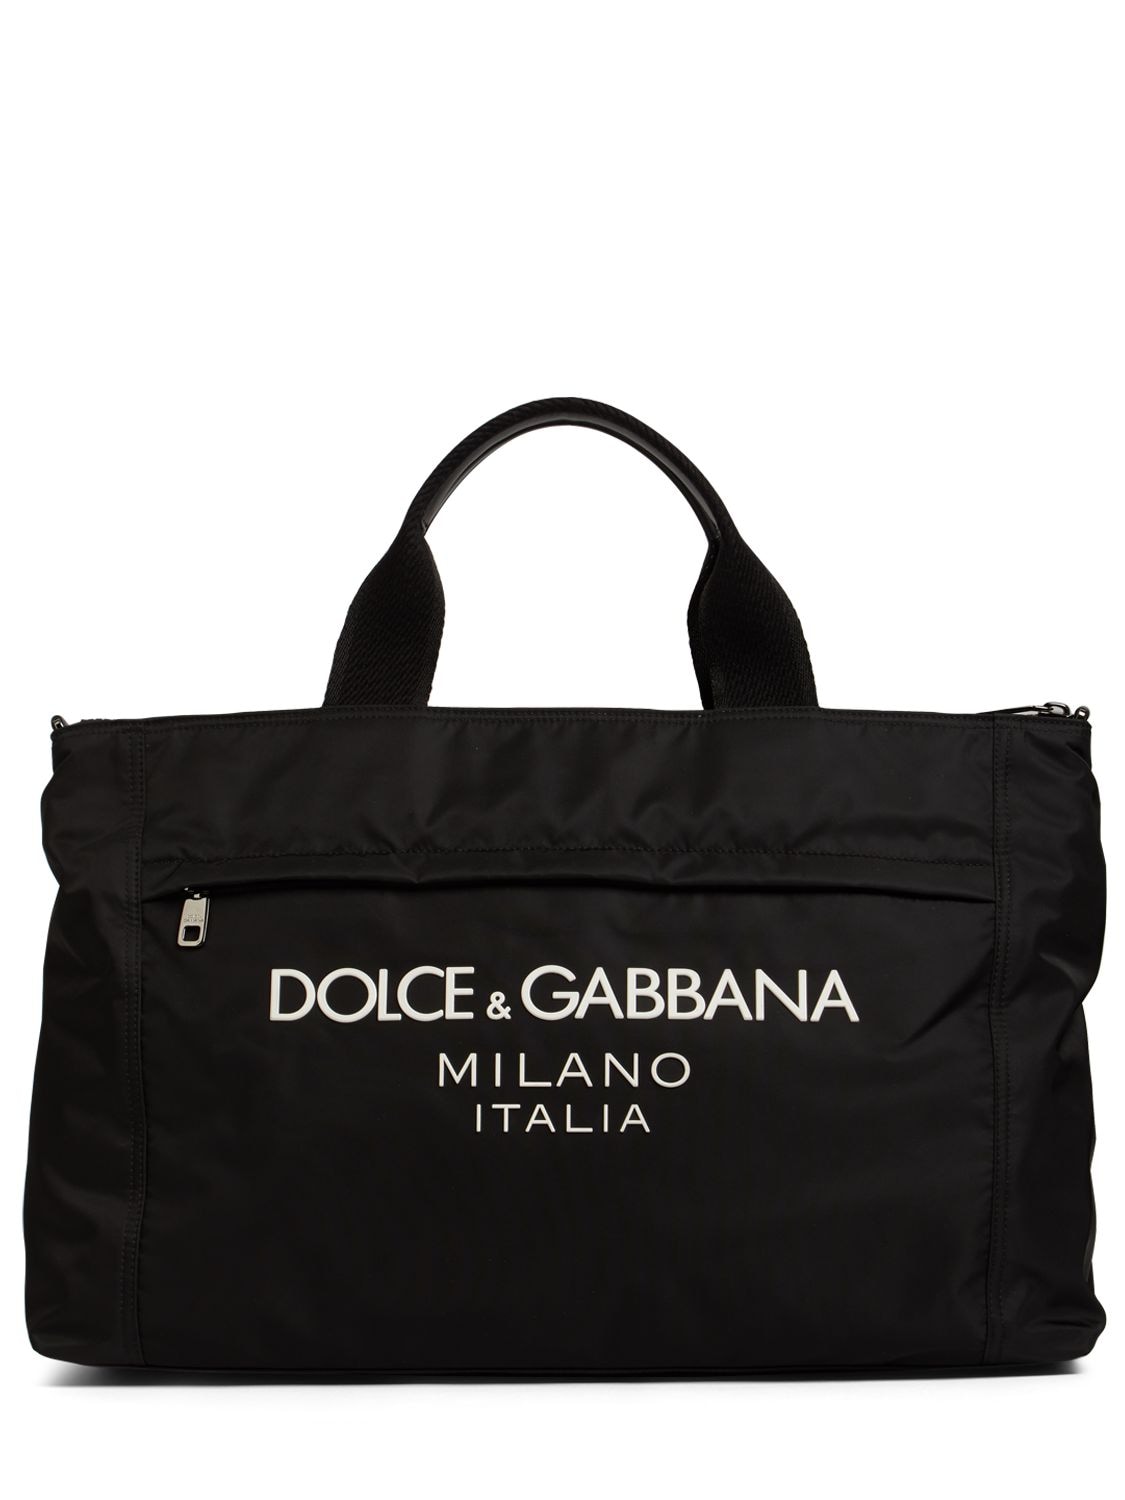 DOLCE & GABBANA Logo Nylon & Leather Duffle Bag